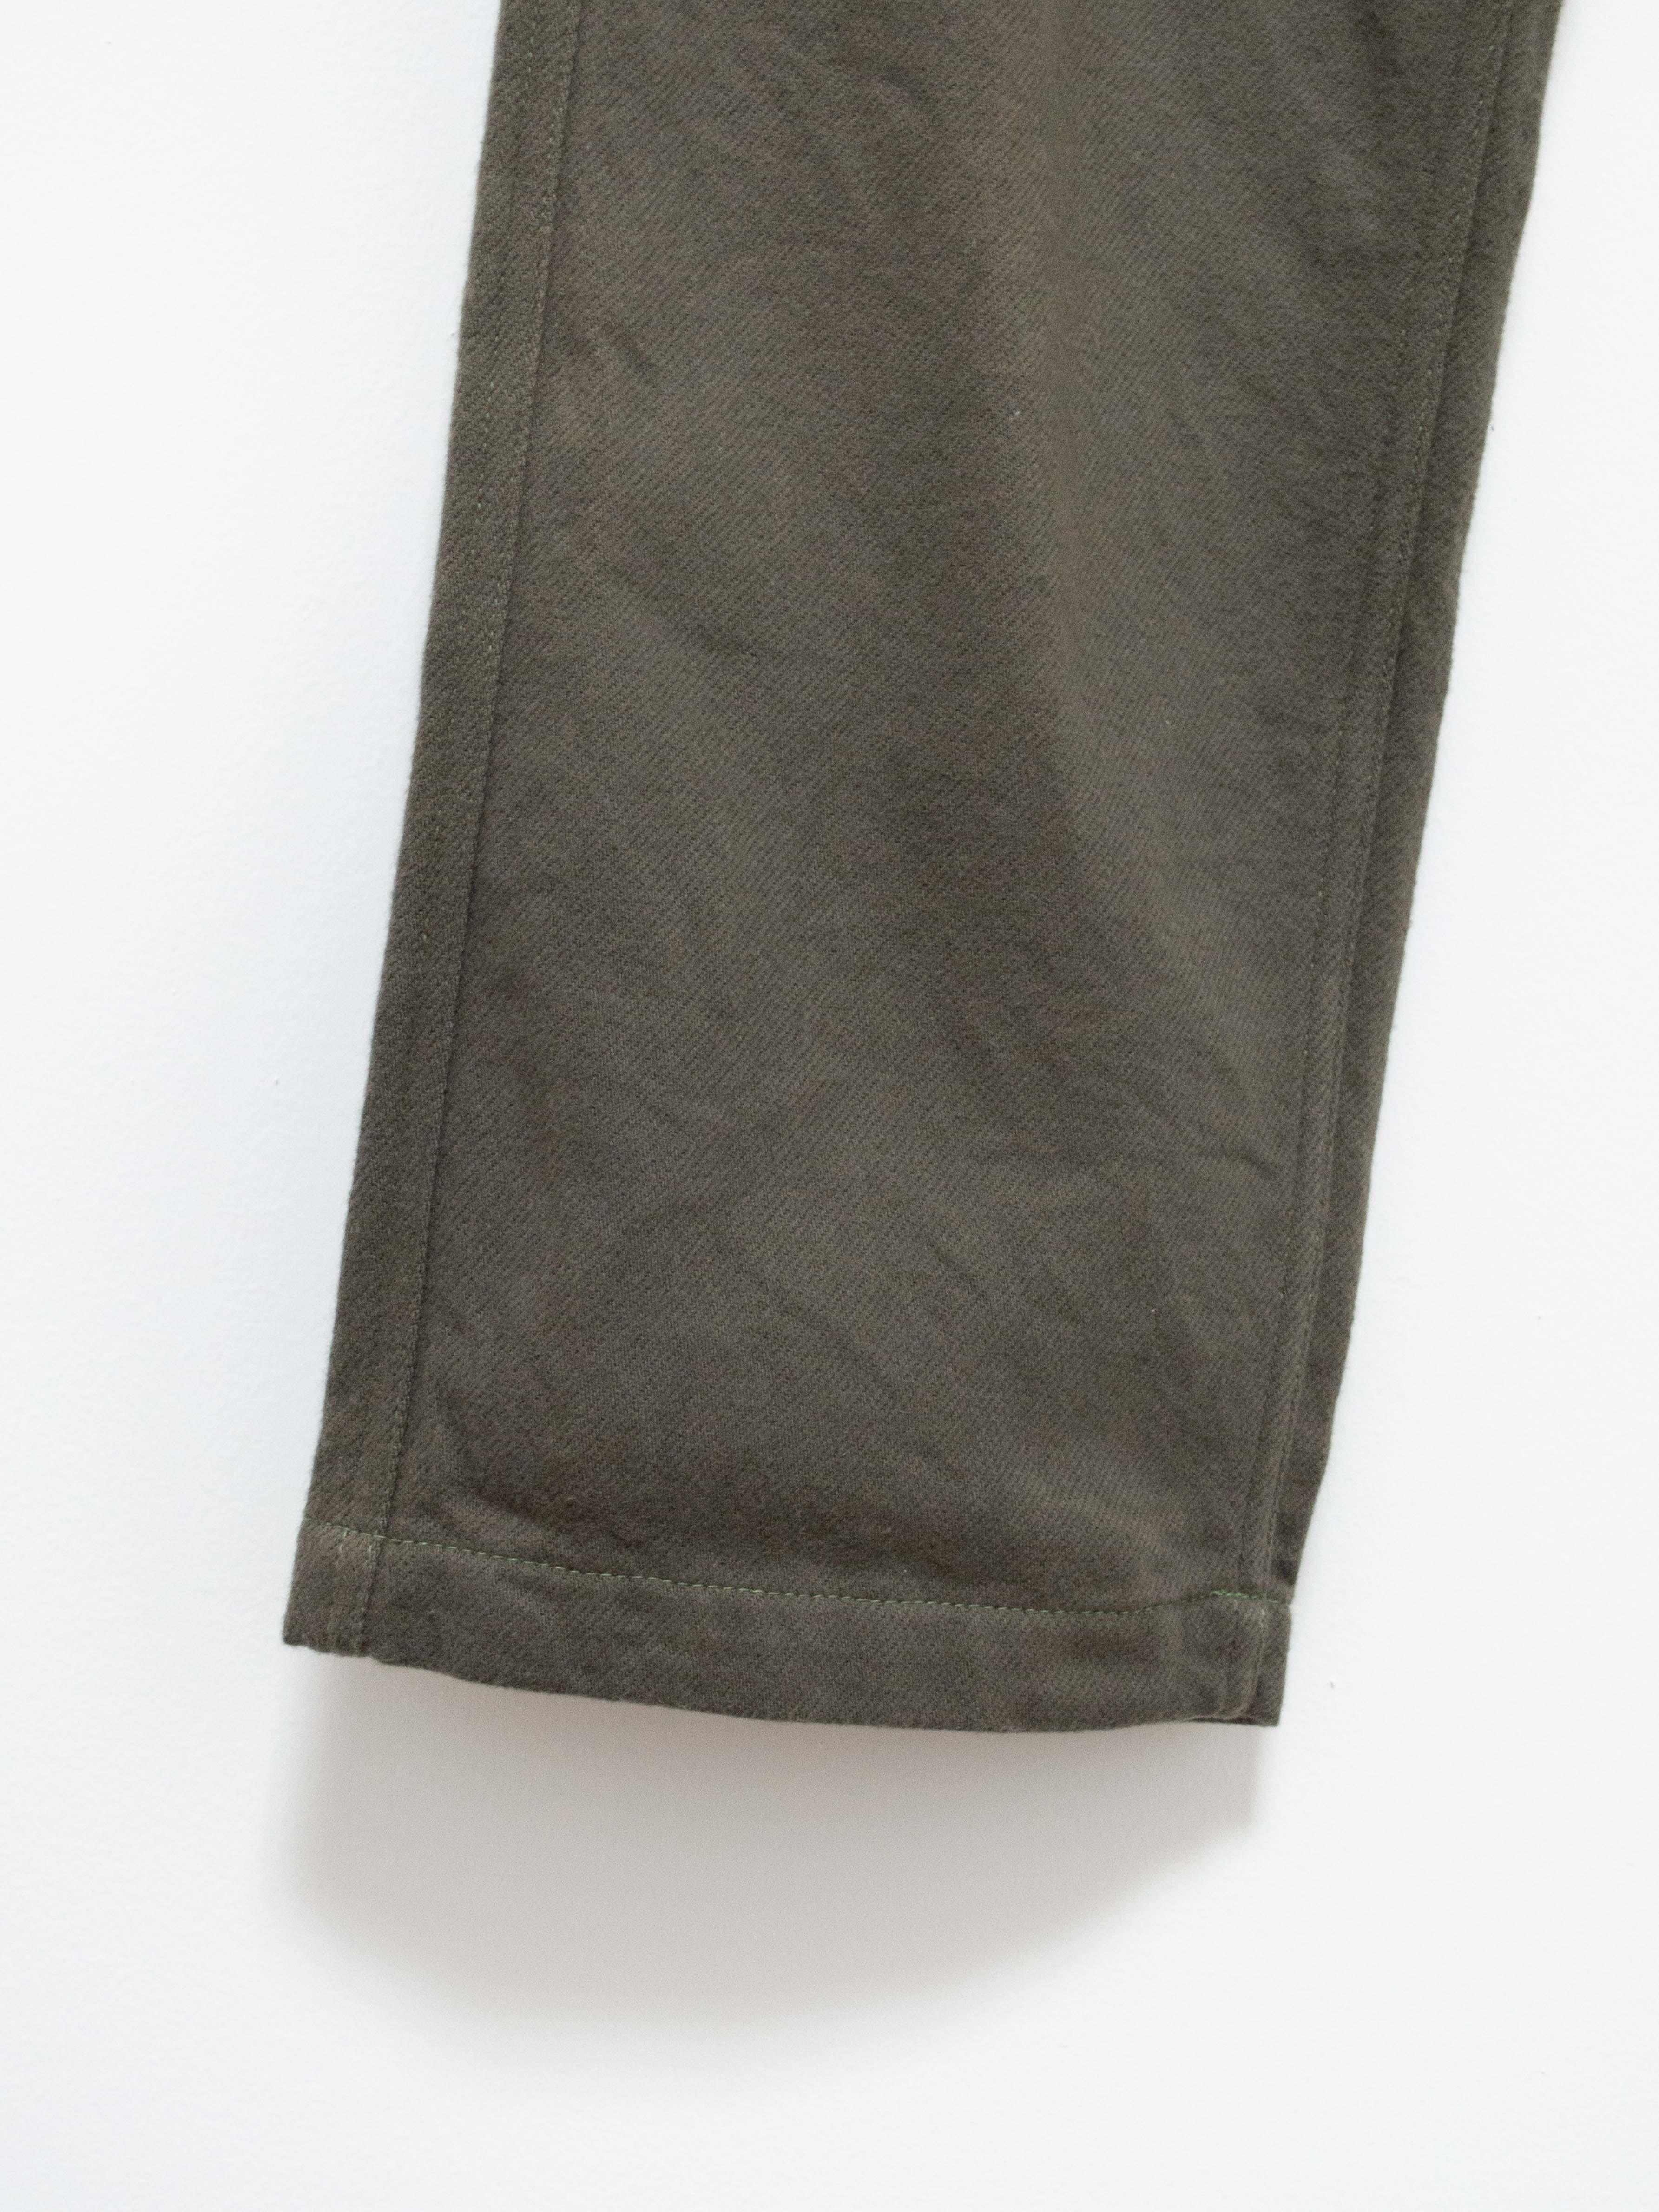 Namu Shop - ts(s) Twill Color Stitched Fatigue Pants